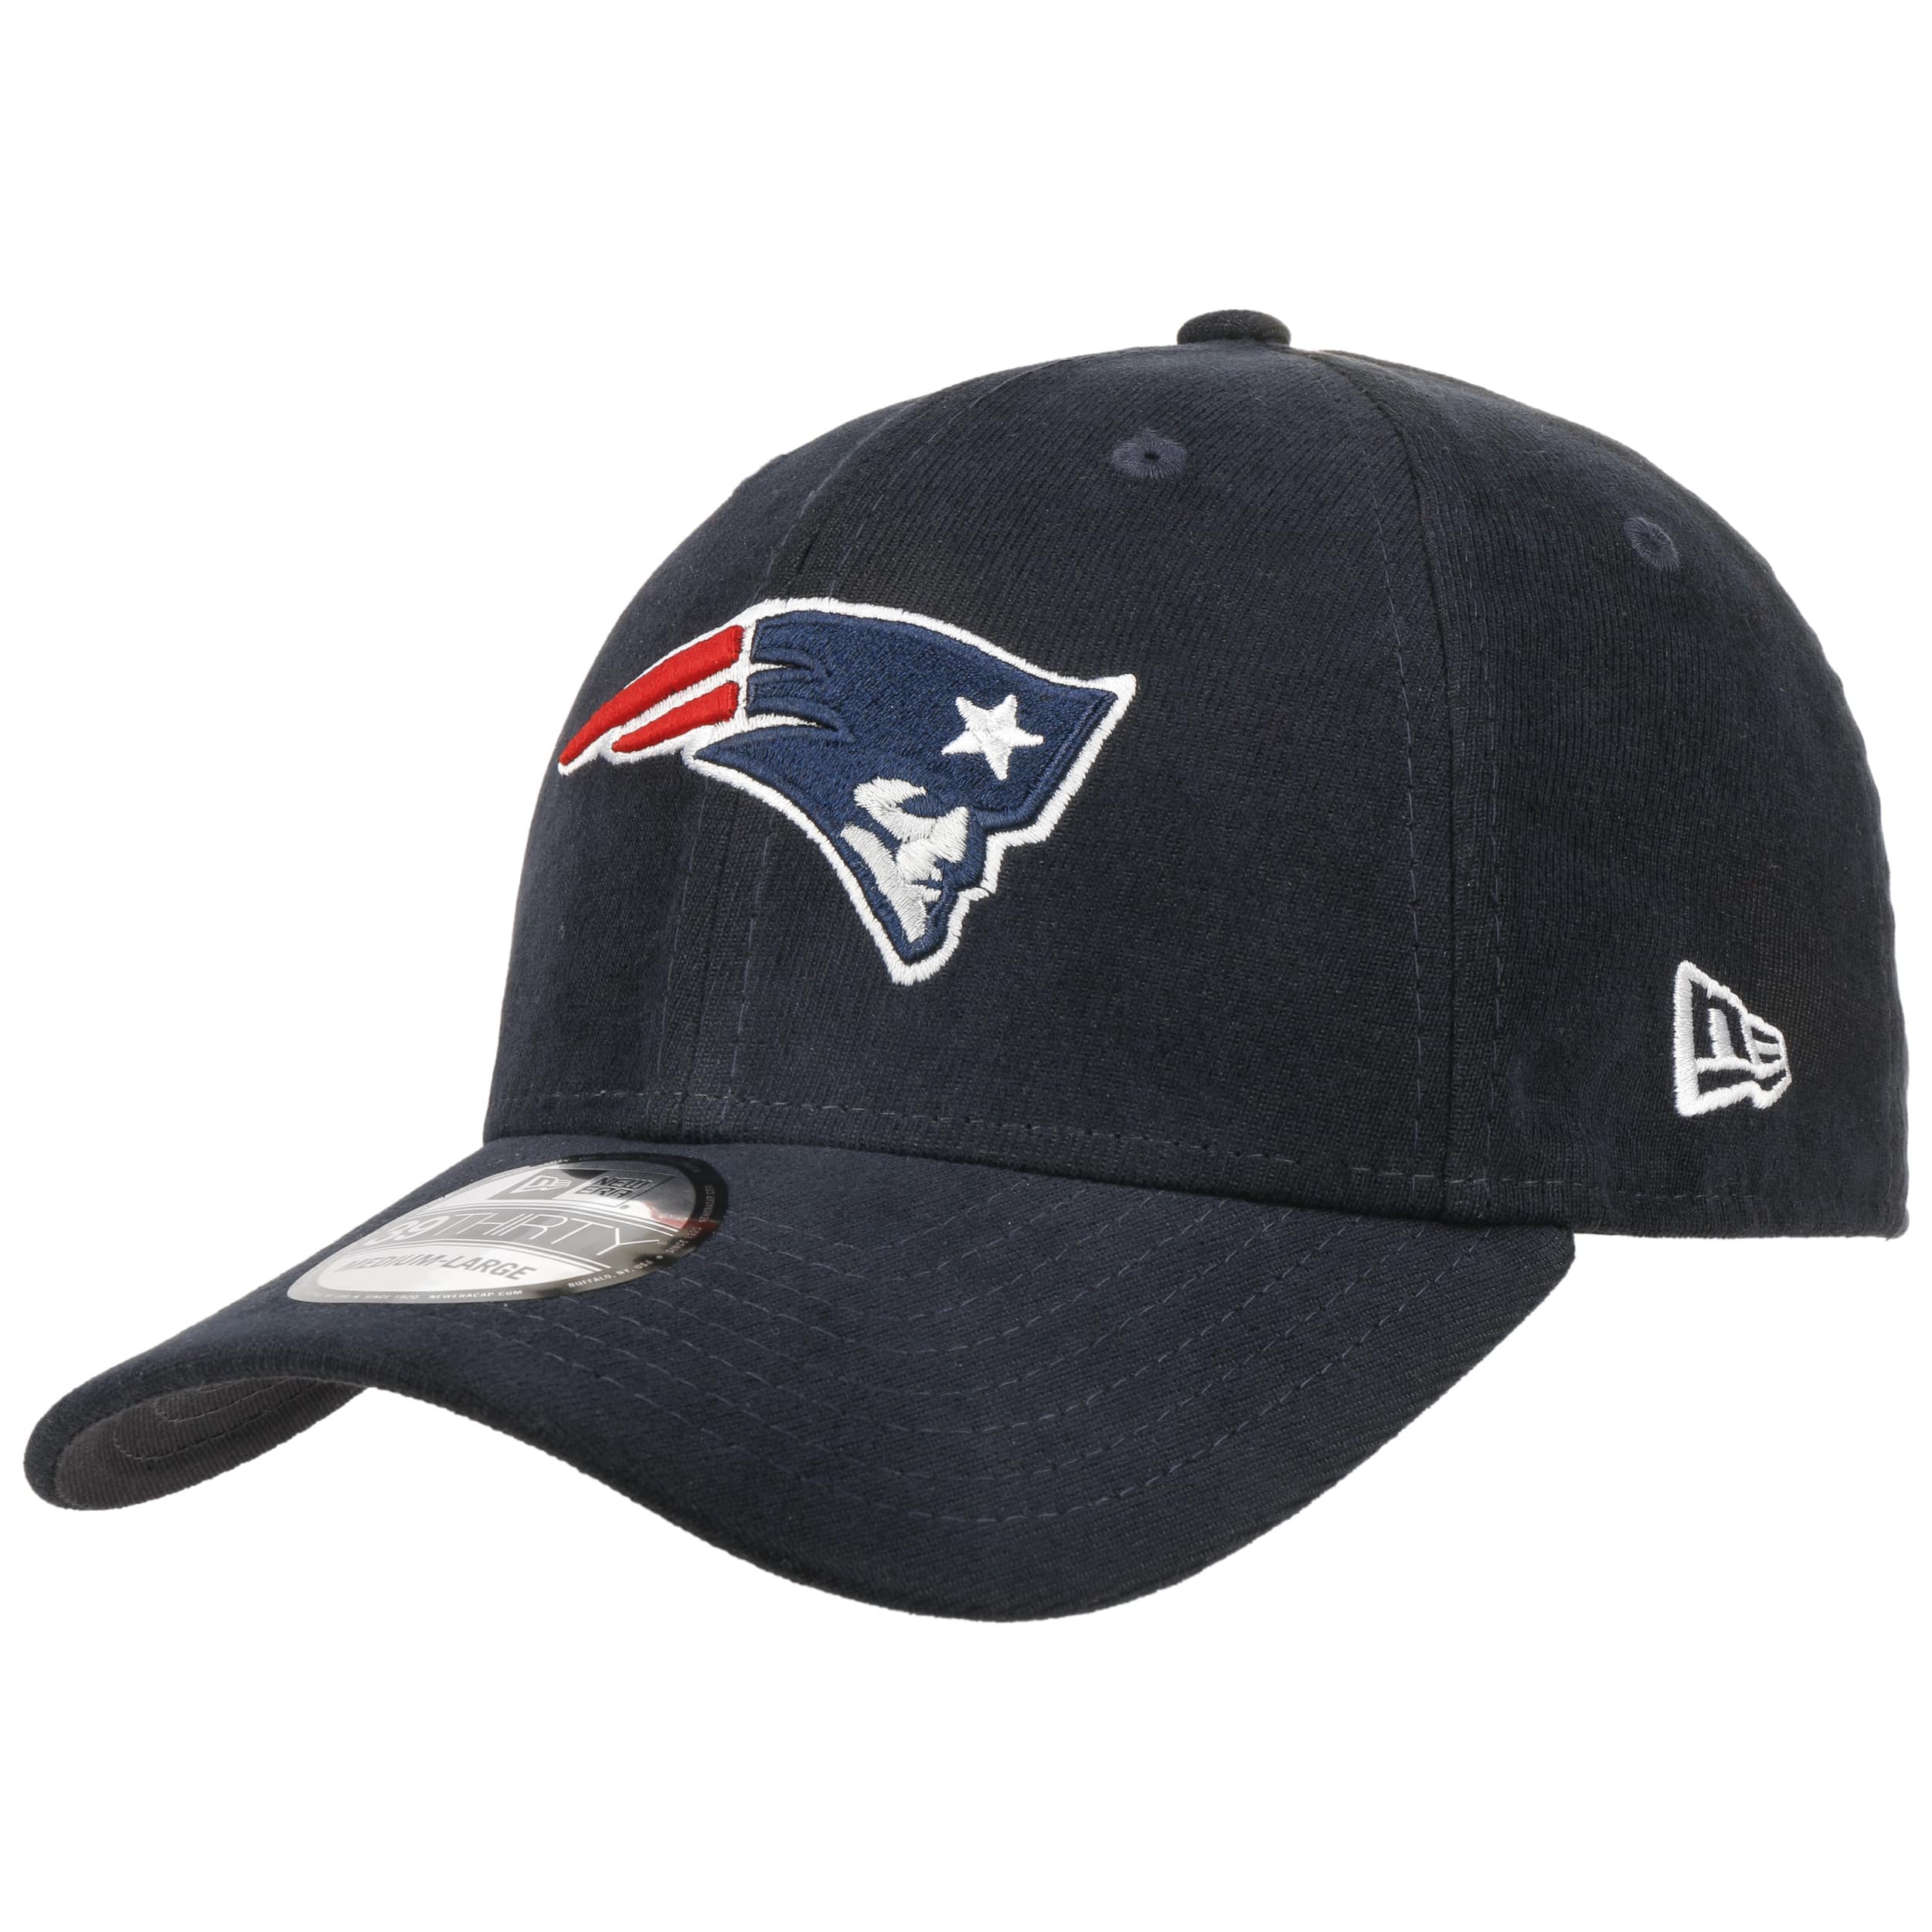 Personalized NFL New England Patriots Bucket Hat Sport NFL Bucket Hat